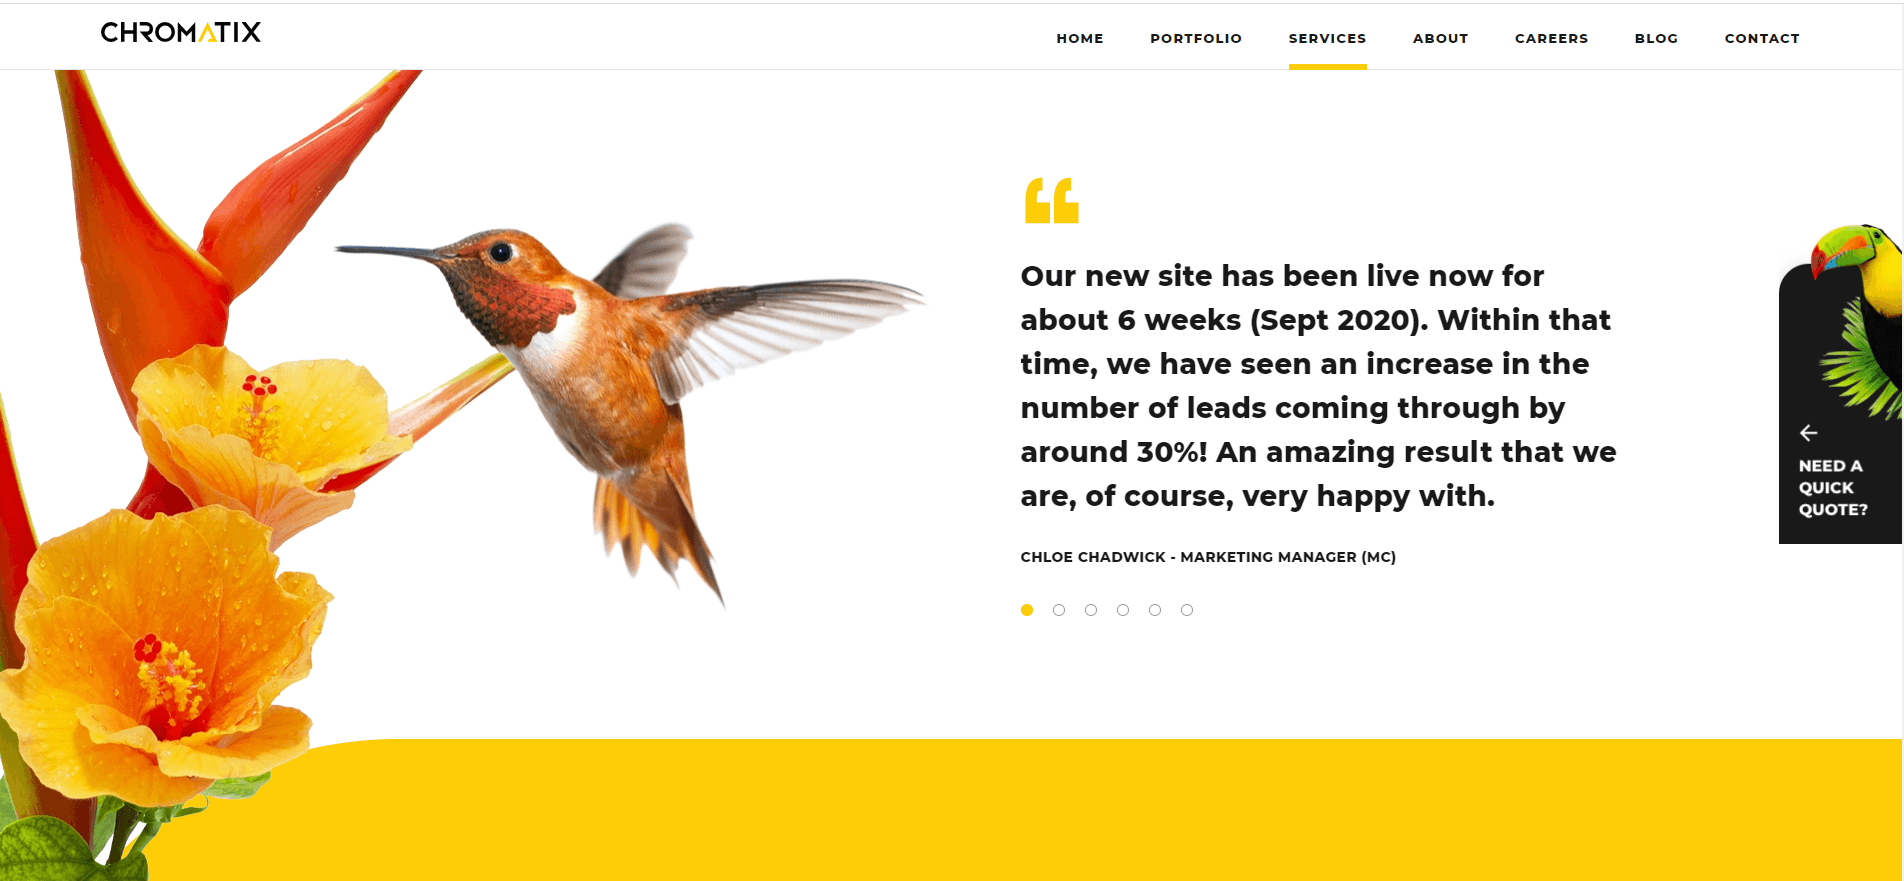 Chromatix web page showing orange hummingbird and an orange flower.